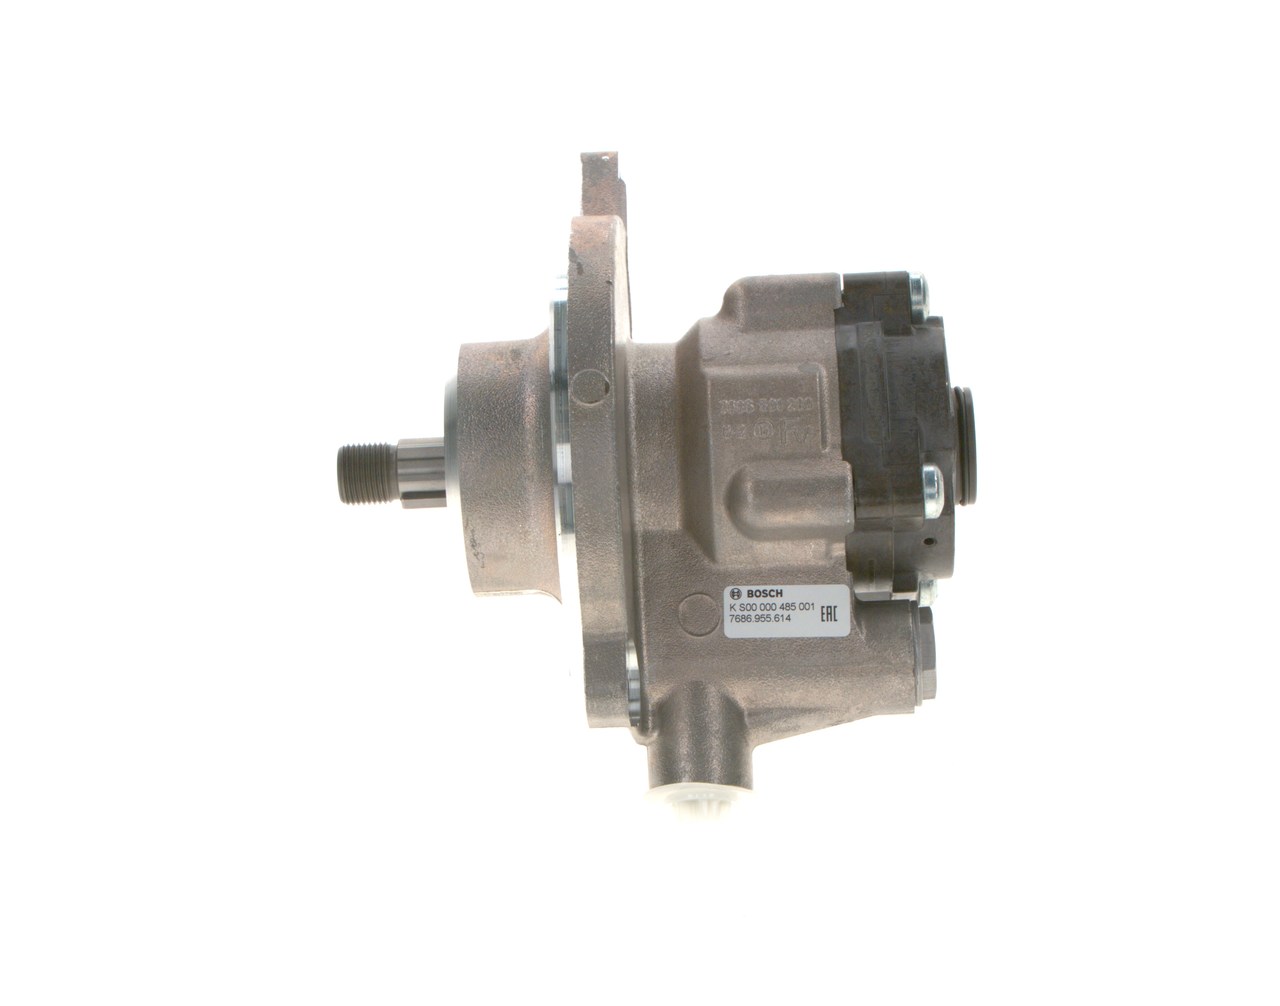 BOSCH K S01 000 455 Power steering pump Hydraulic, M 16 x 1,5, Vane Pump, Anticlockwise rotation